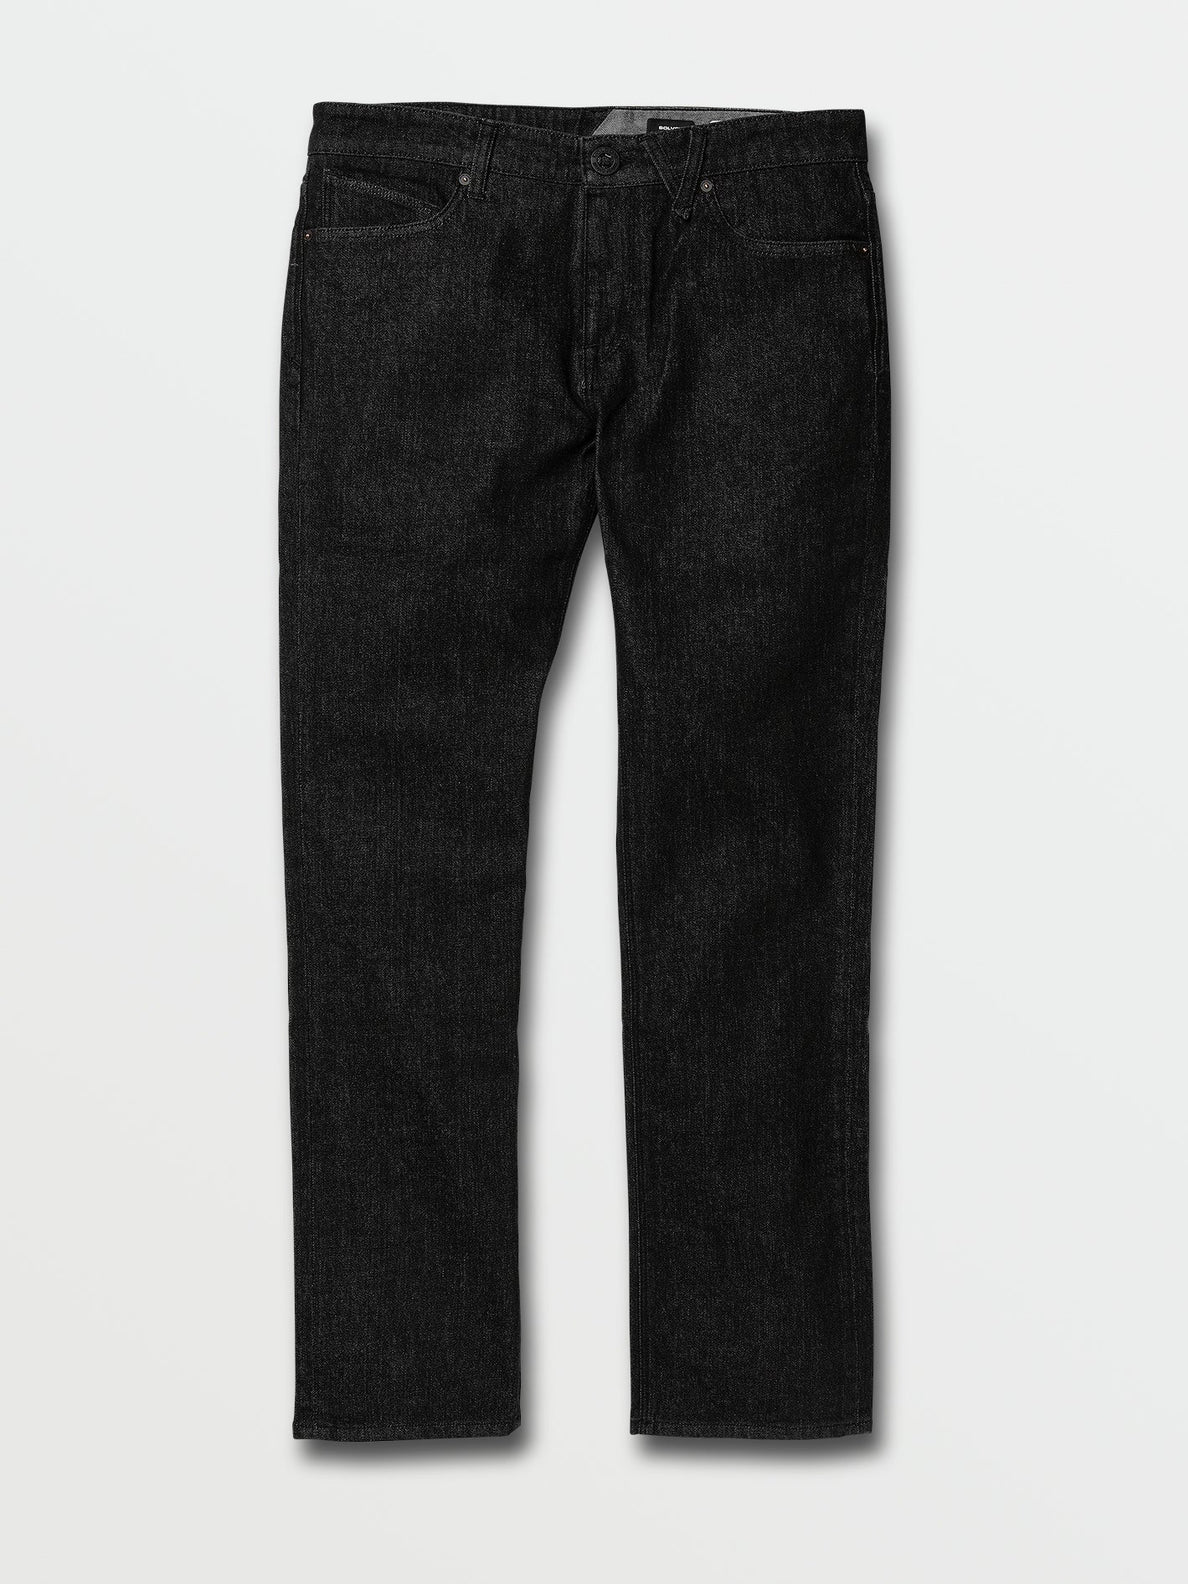 V Solver Stretch Jeans - Rinsed Black